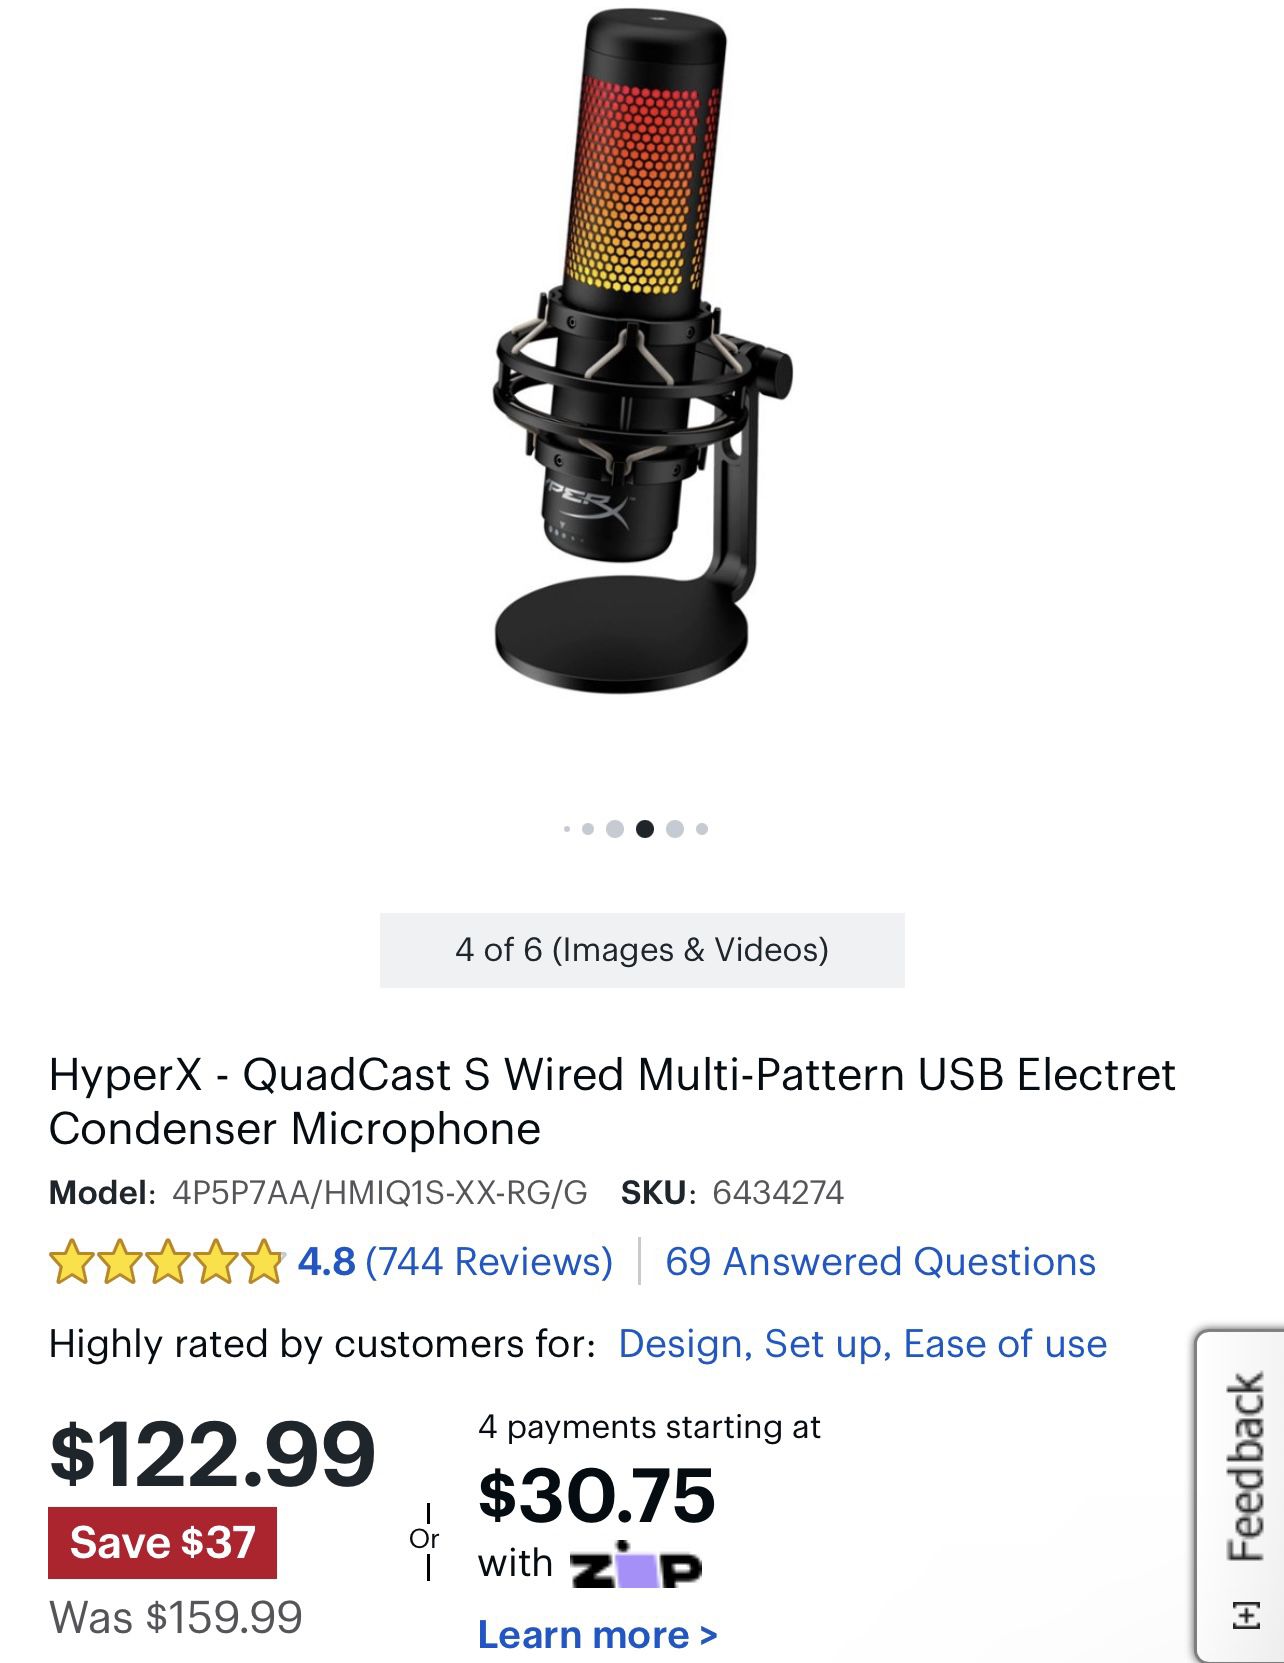 HyperX QuadCast S Wired Multi-Pattern USB Electret Condenser